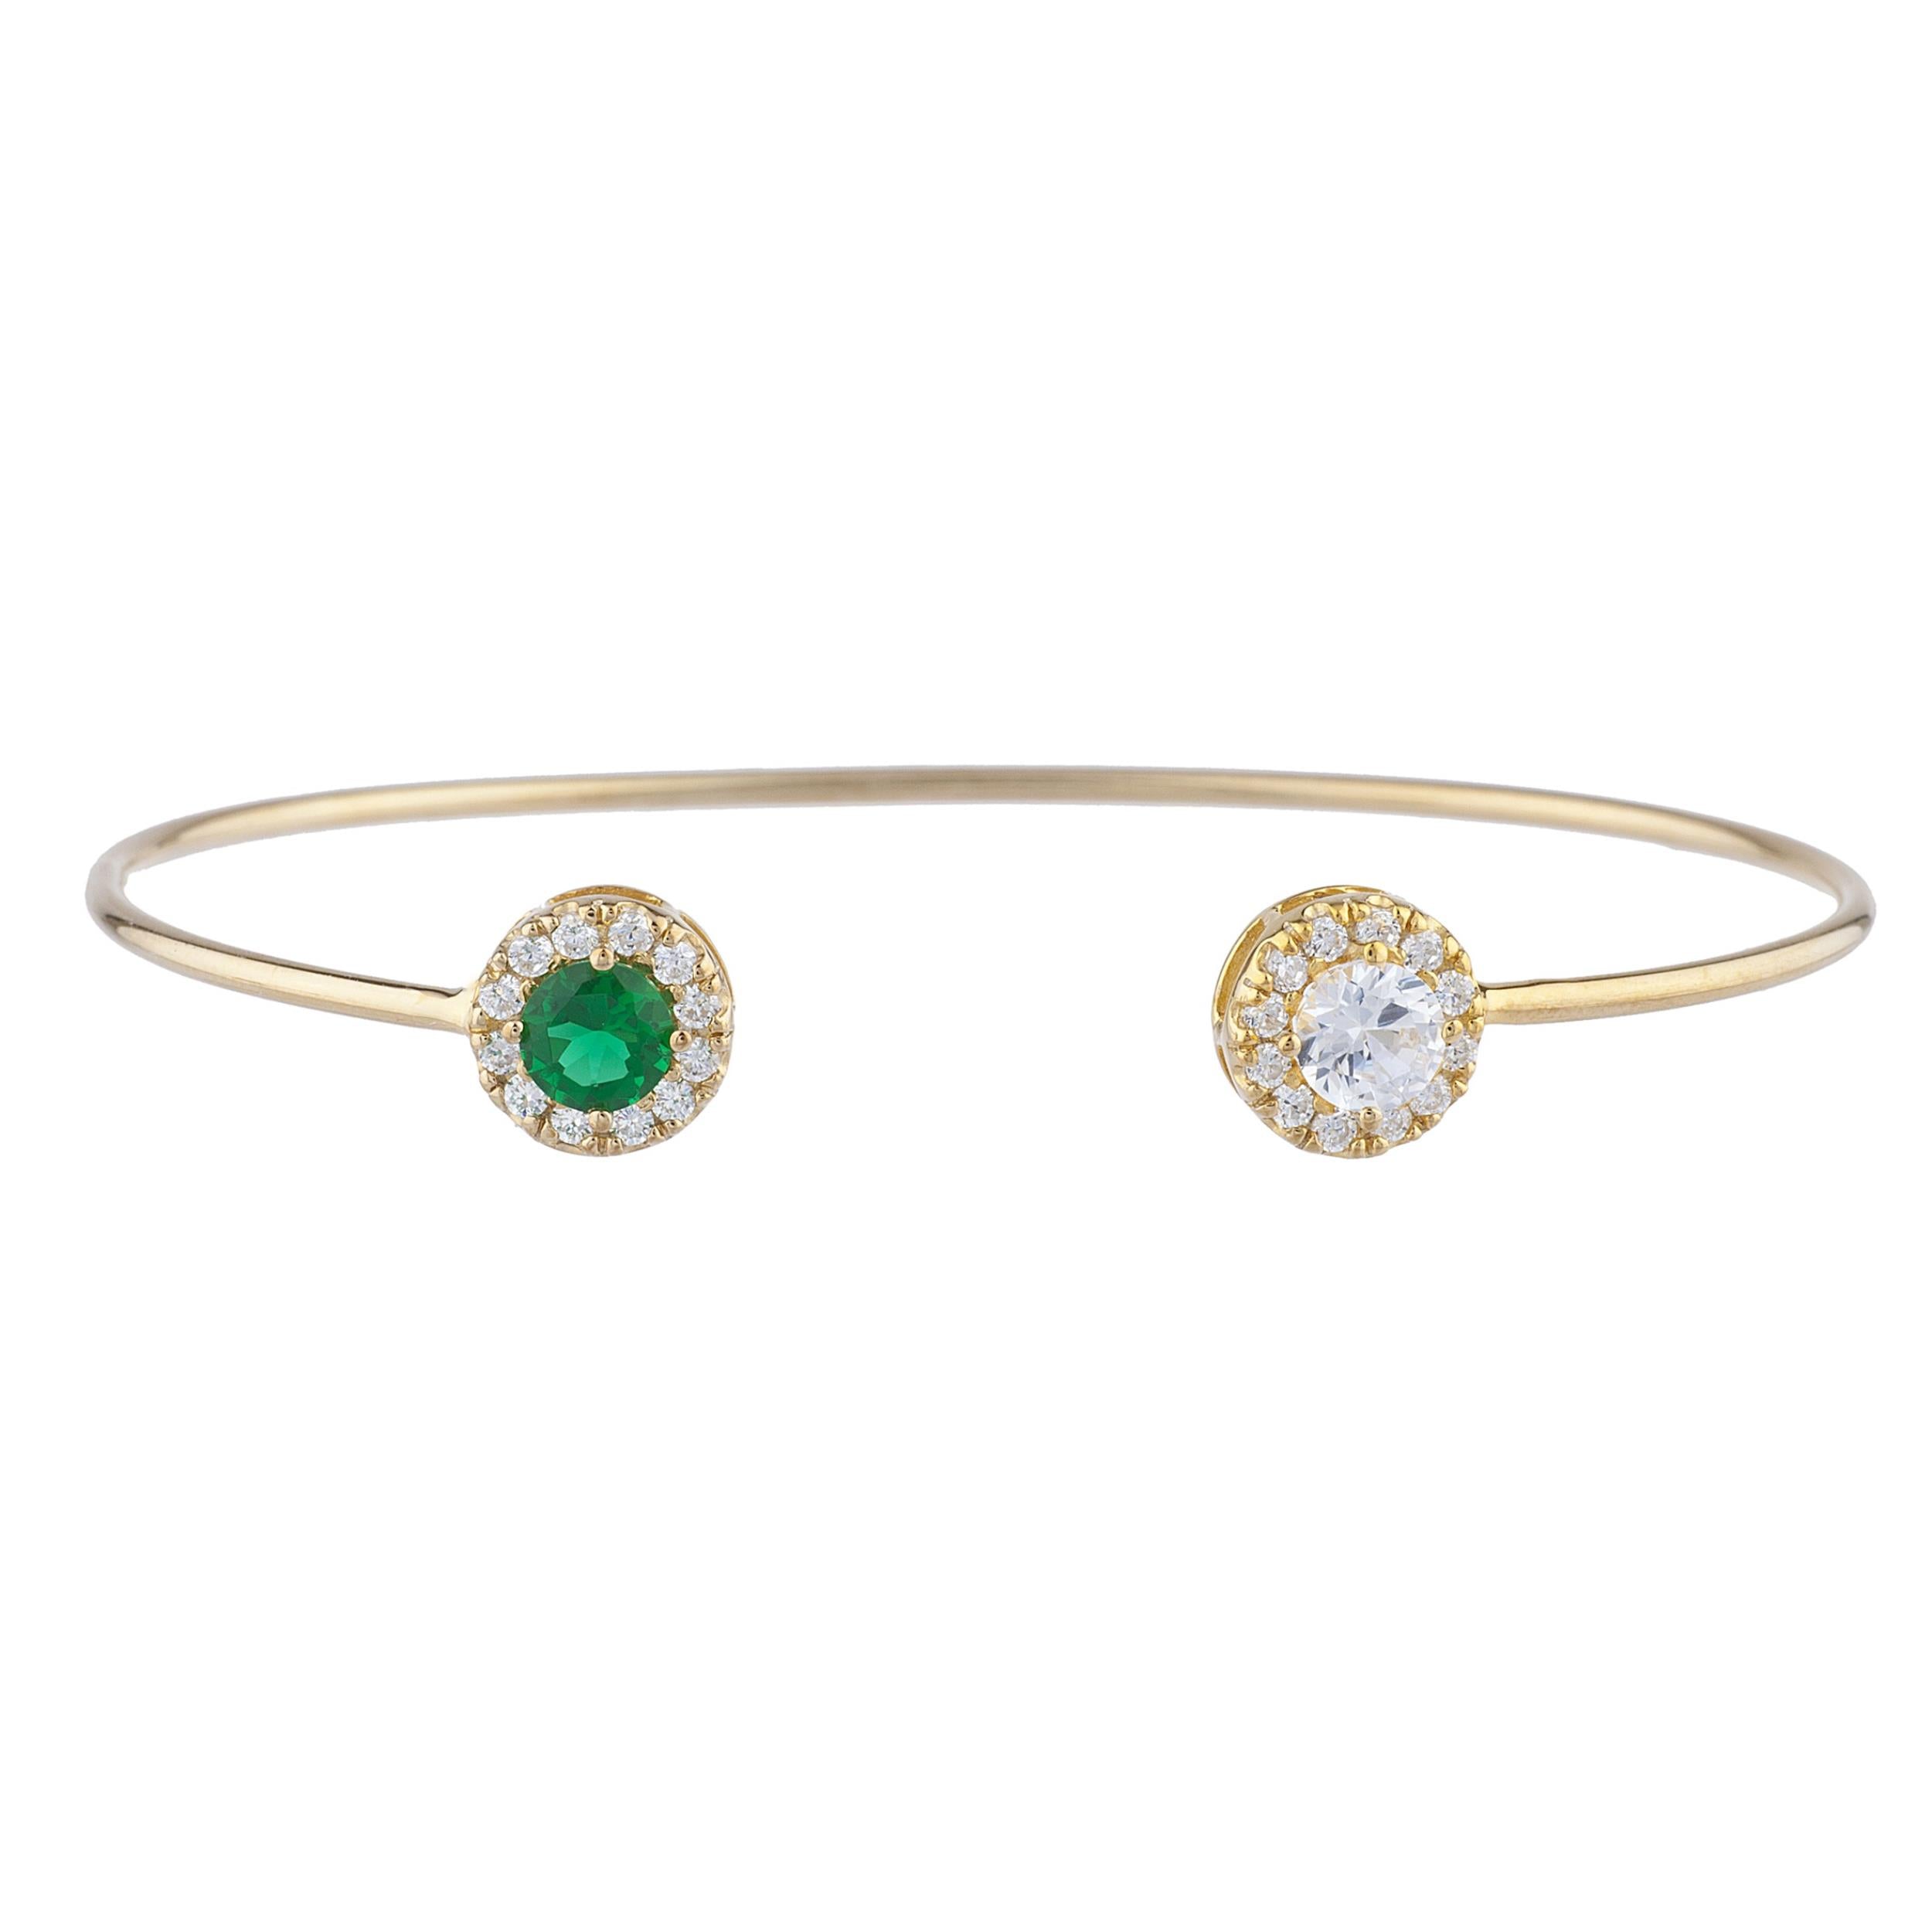 1 Ct White Sapphire & Emerald Halo Design Round Bangle Bracelet 14Kt Yellow Gold Rose Gold Silver